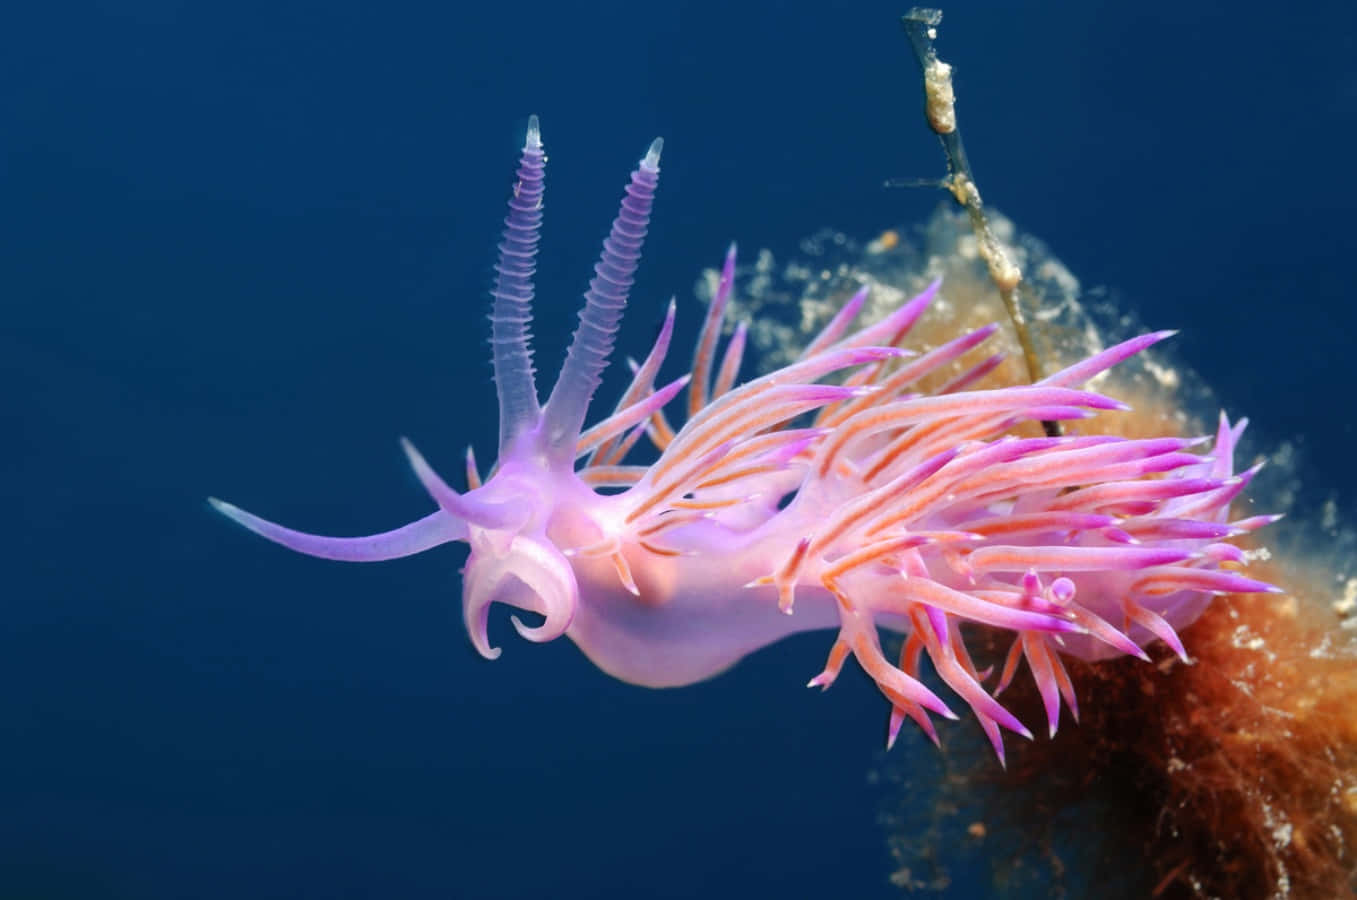 A Pink Sea Slug Is Swimming In The Ocean